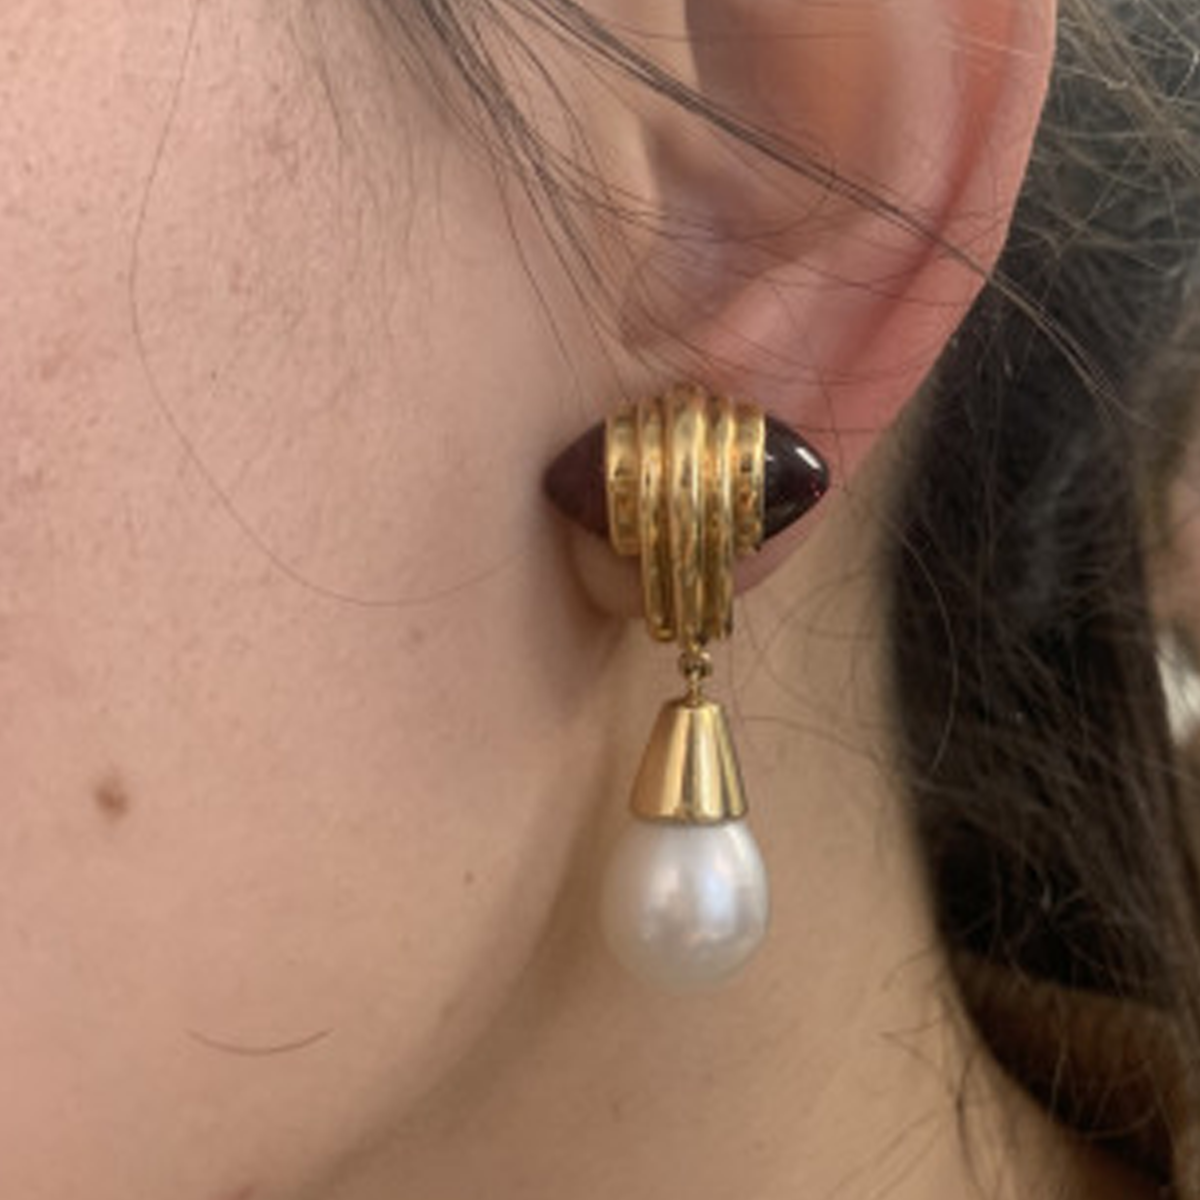 Bulgari 1980s 18KT Yellow Gold Pink Tourmaline & Cultured South Sea Pearl Earrings on ear